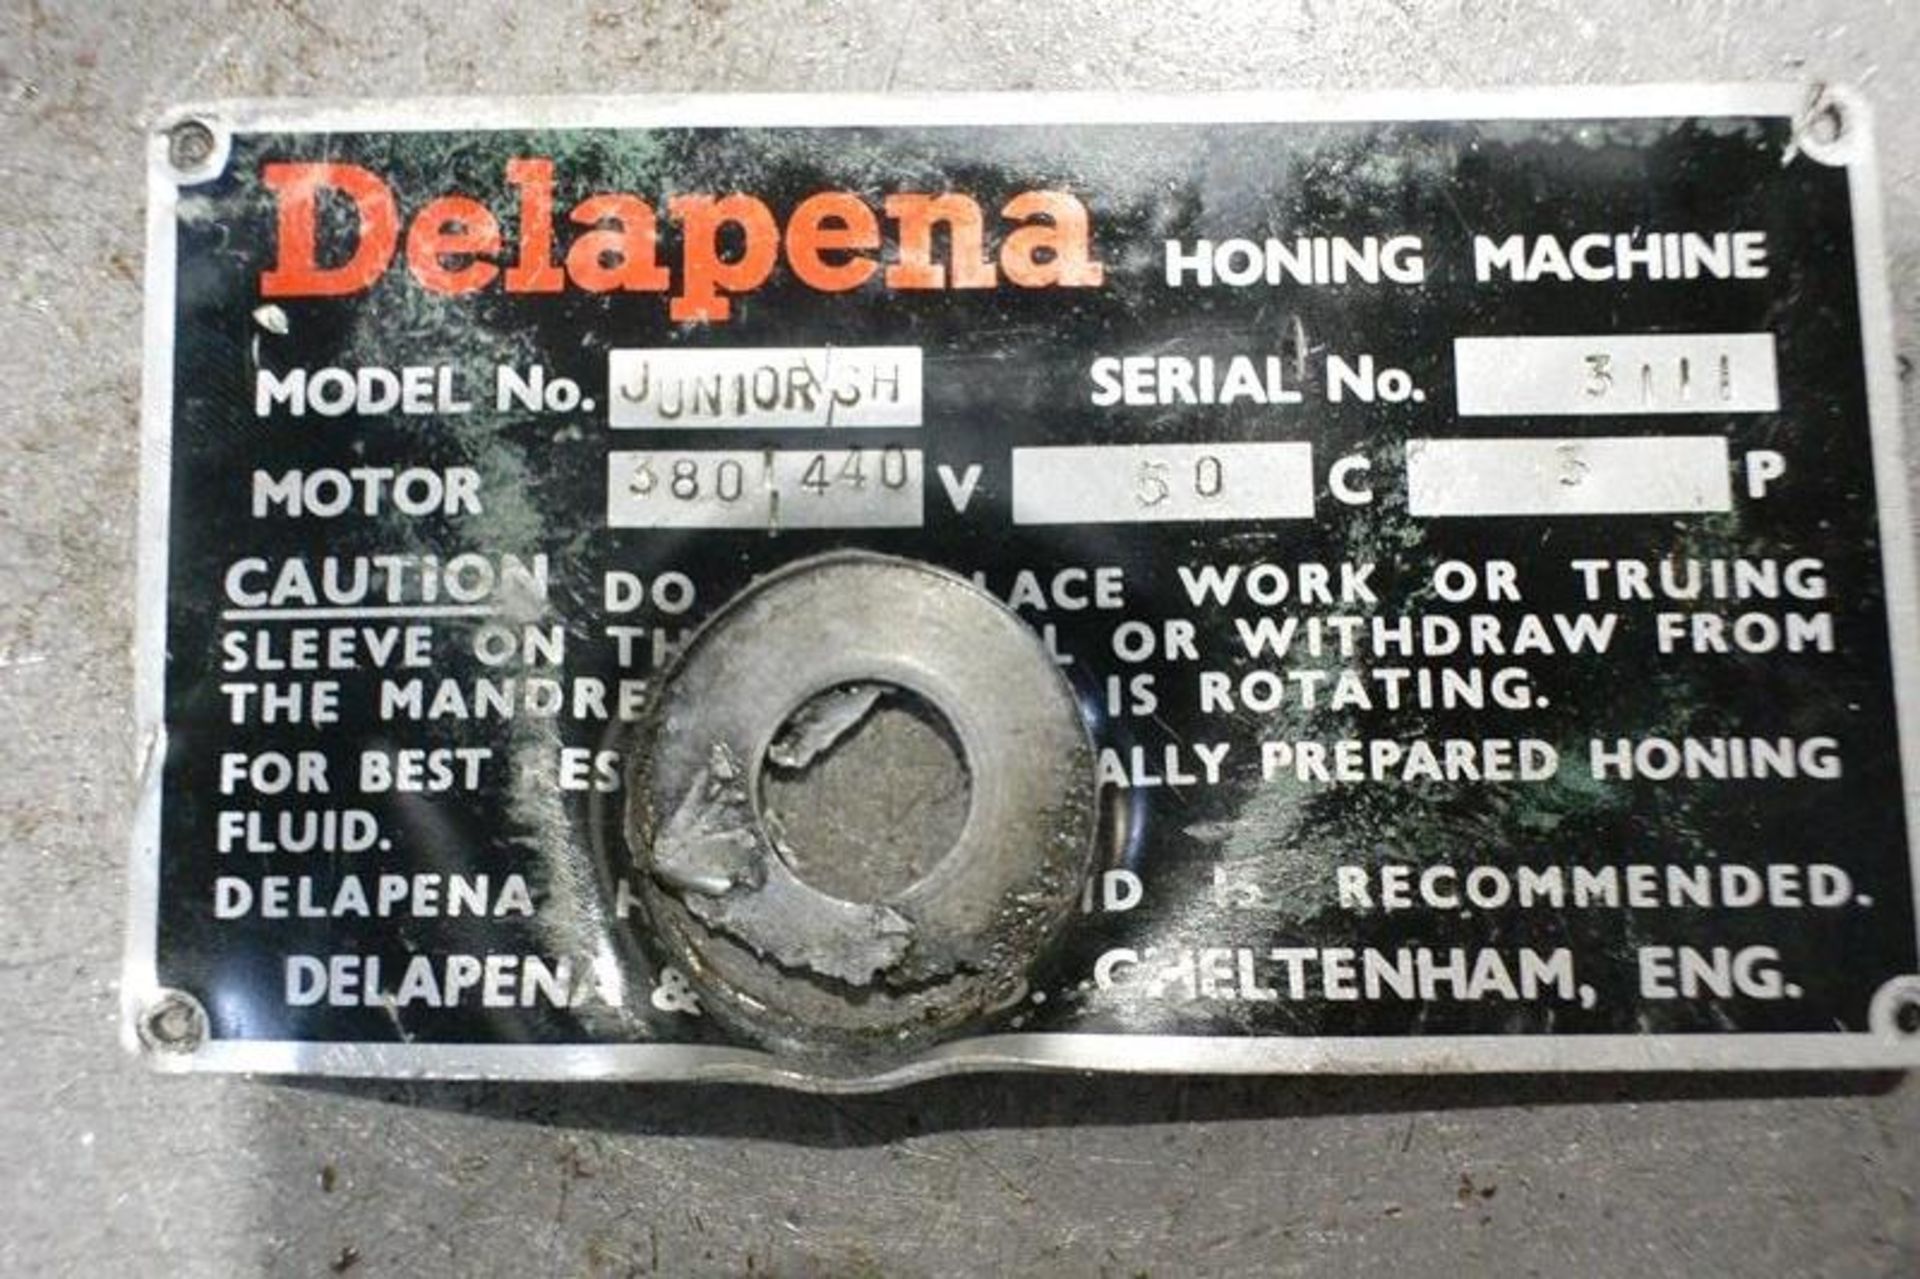 Delapena Junior SH Speedhone horizontal honing machine, serial no. 3111, 3 phase - Image 2 of 6